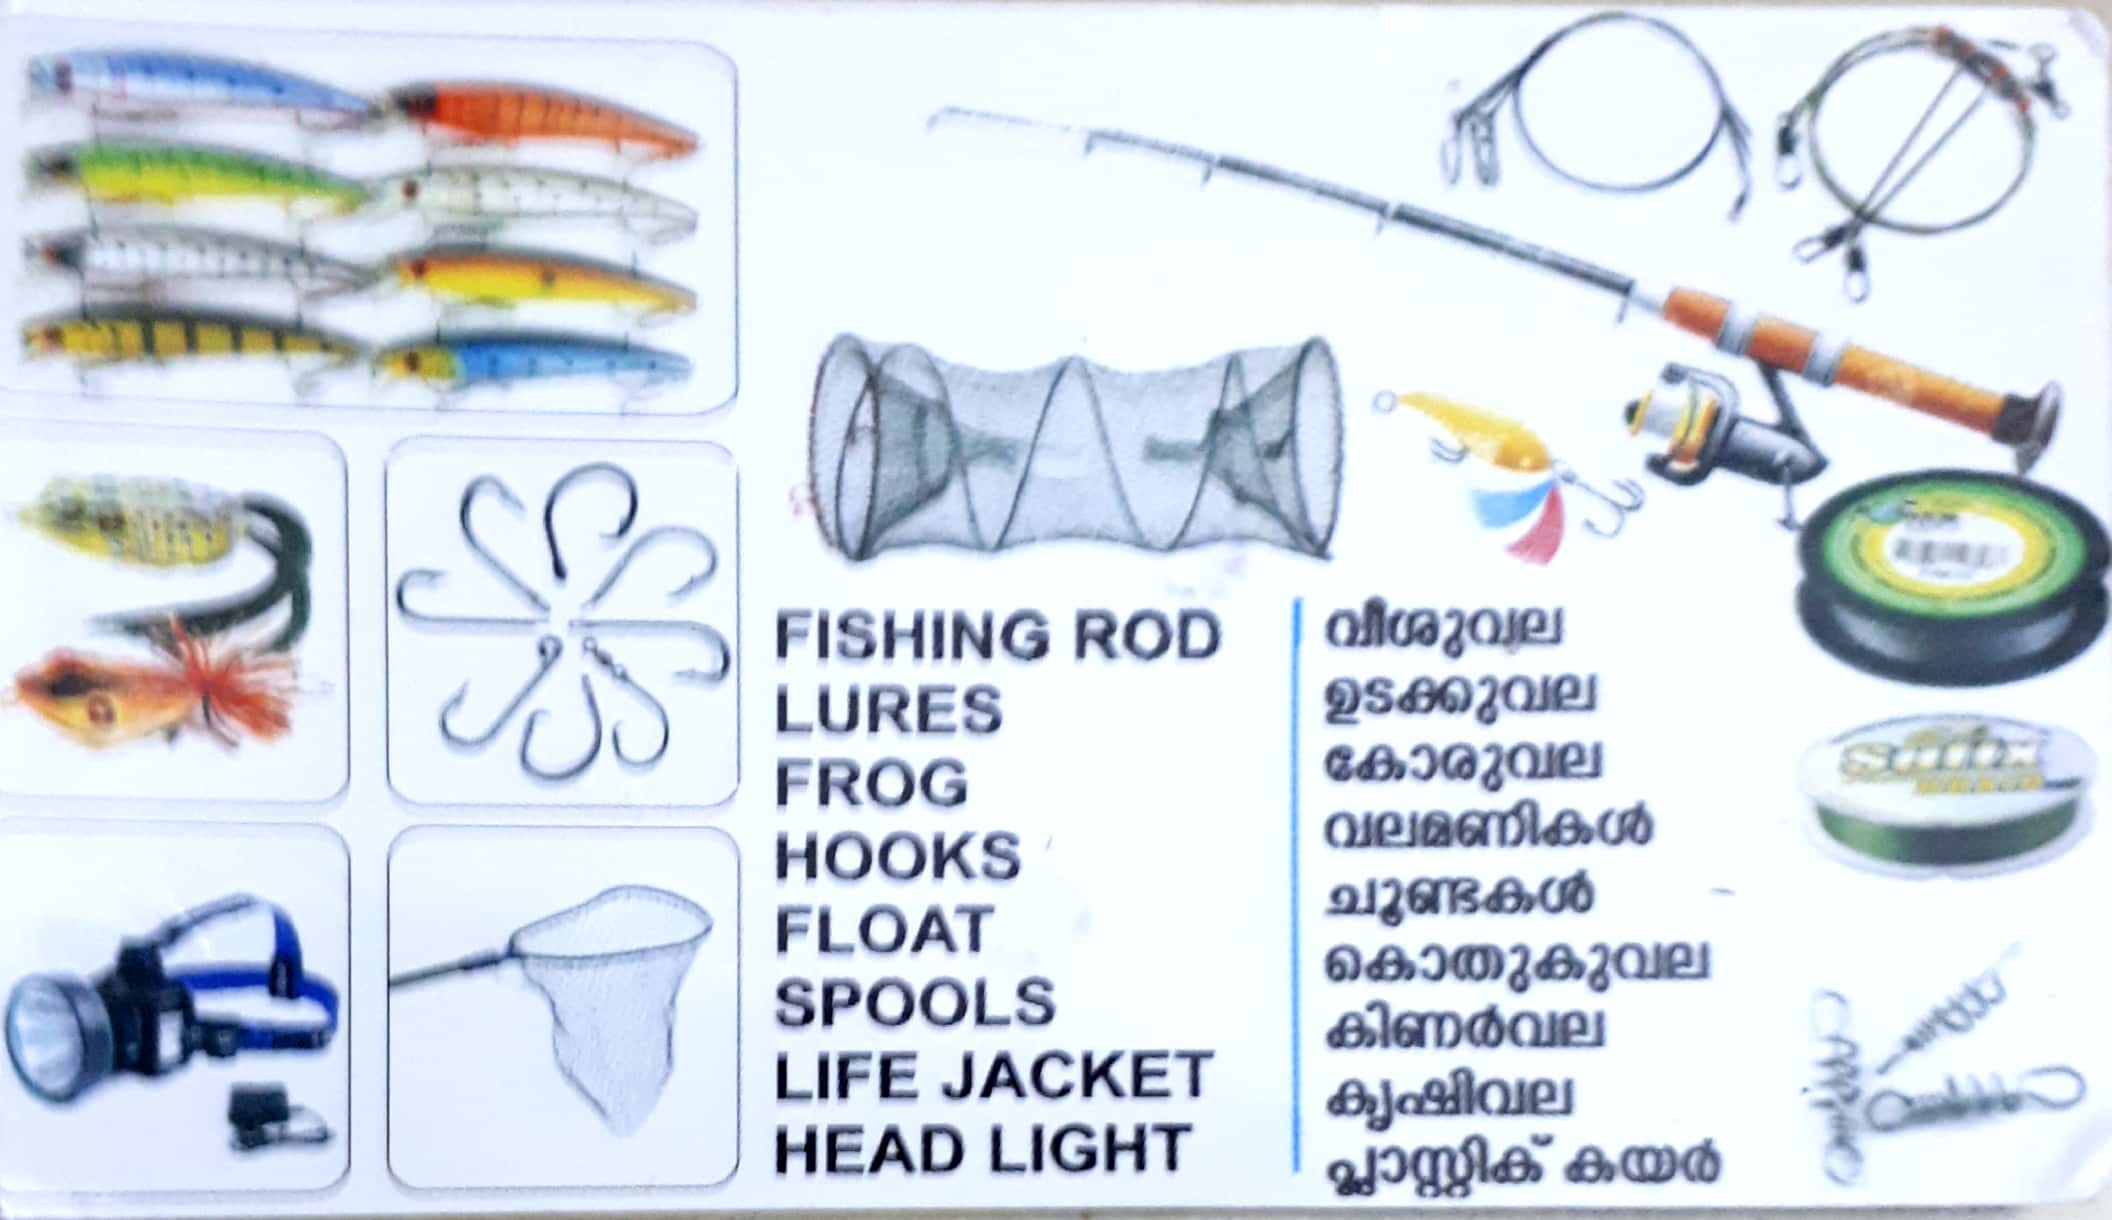 fish tackle equipment kerala india